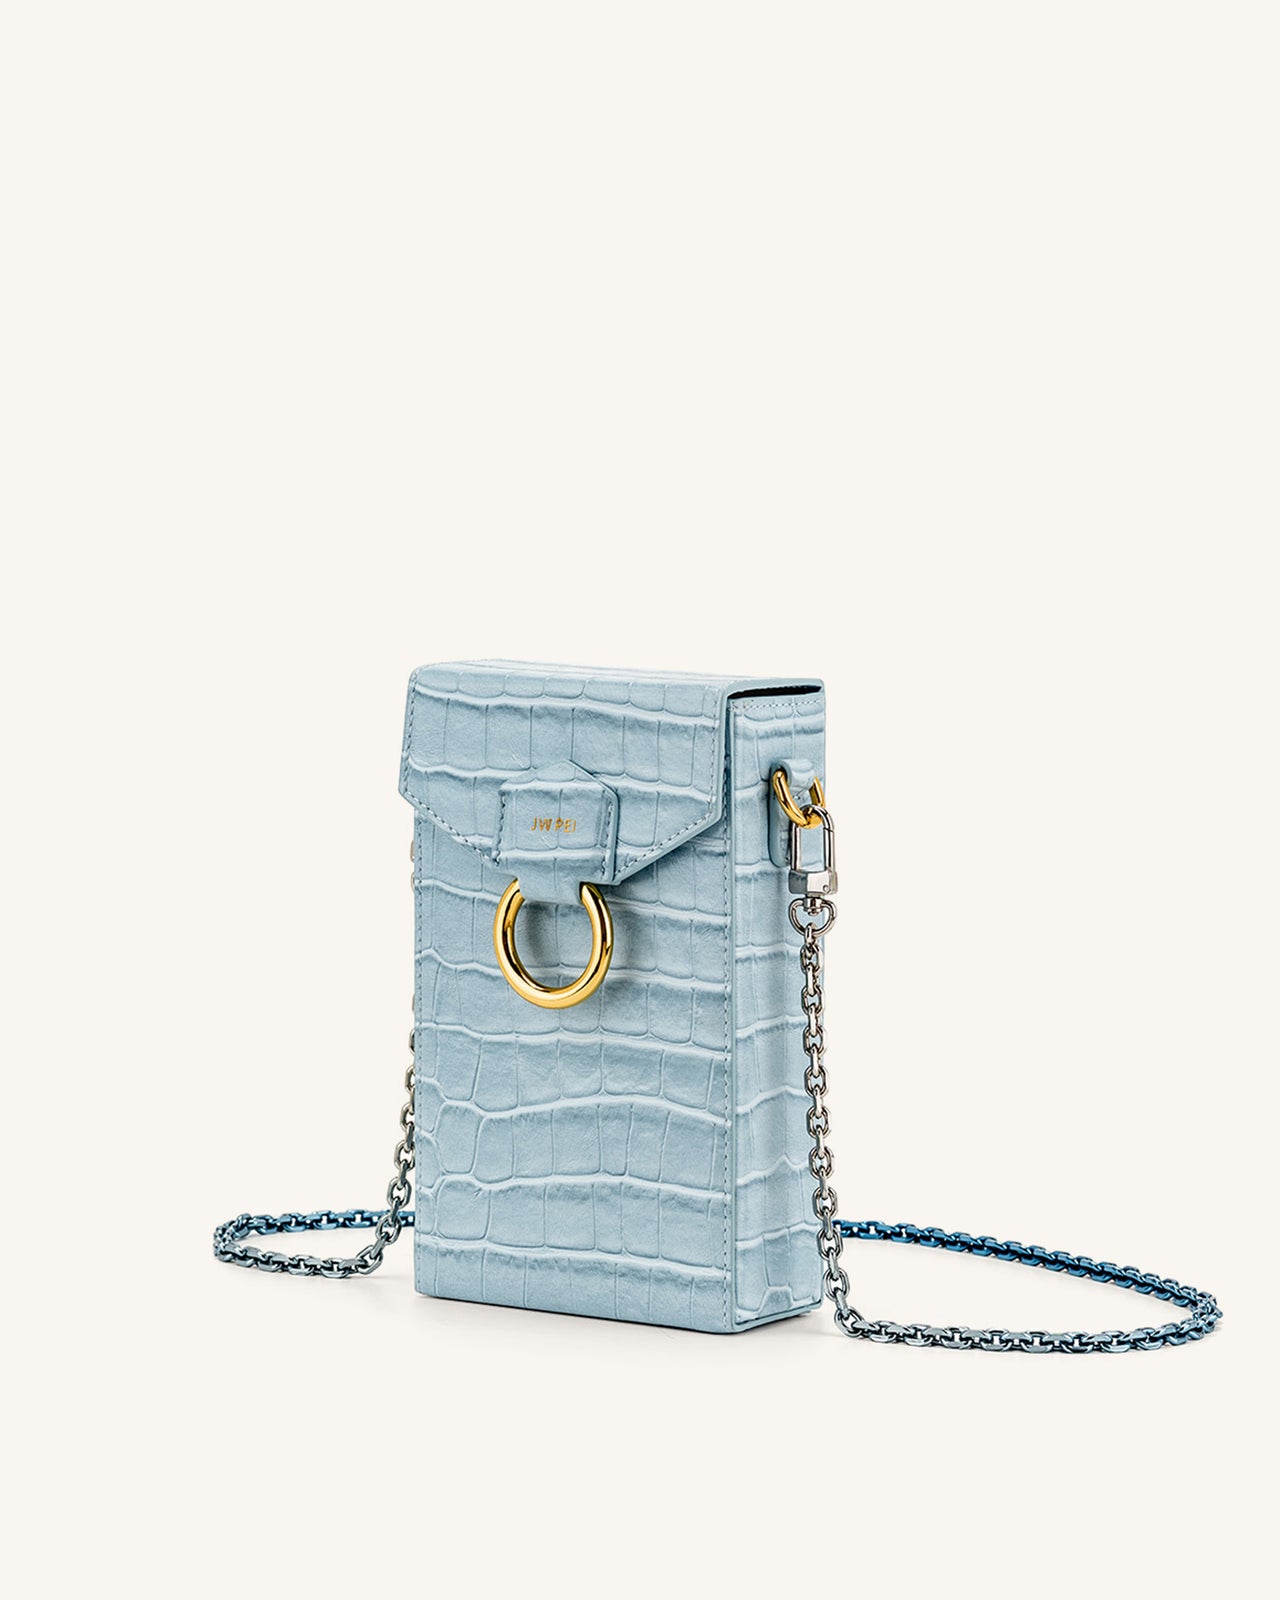 JW PEI - Quinn Phone Bag on Designer Wardrobe